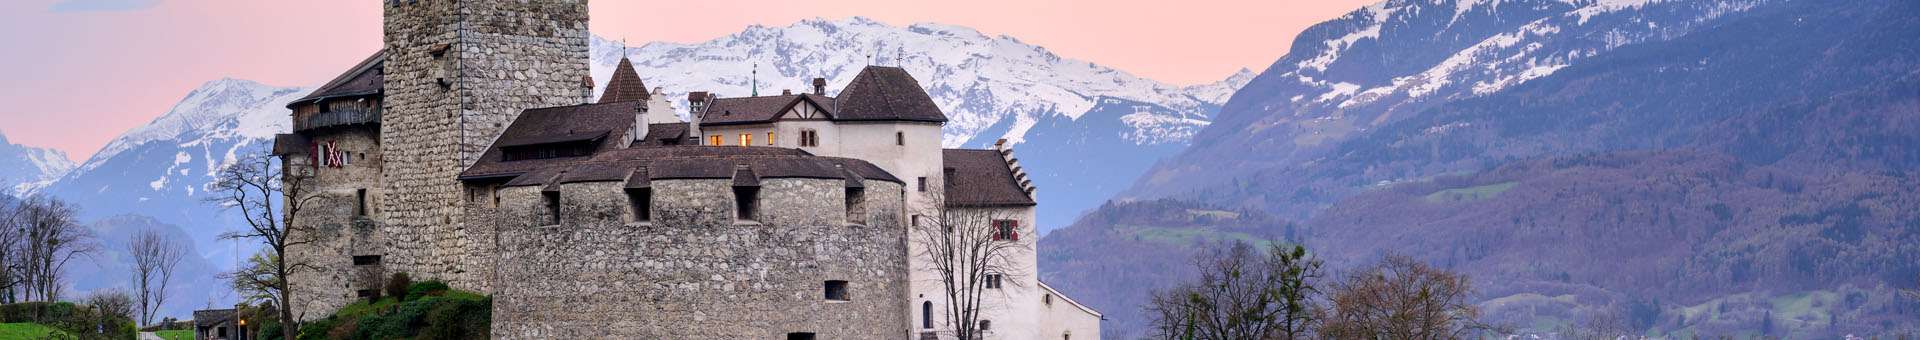 Búsqueda de información Whois de nombres de dominios en Liechtenstein